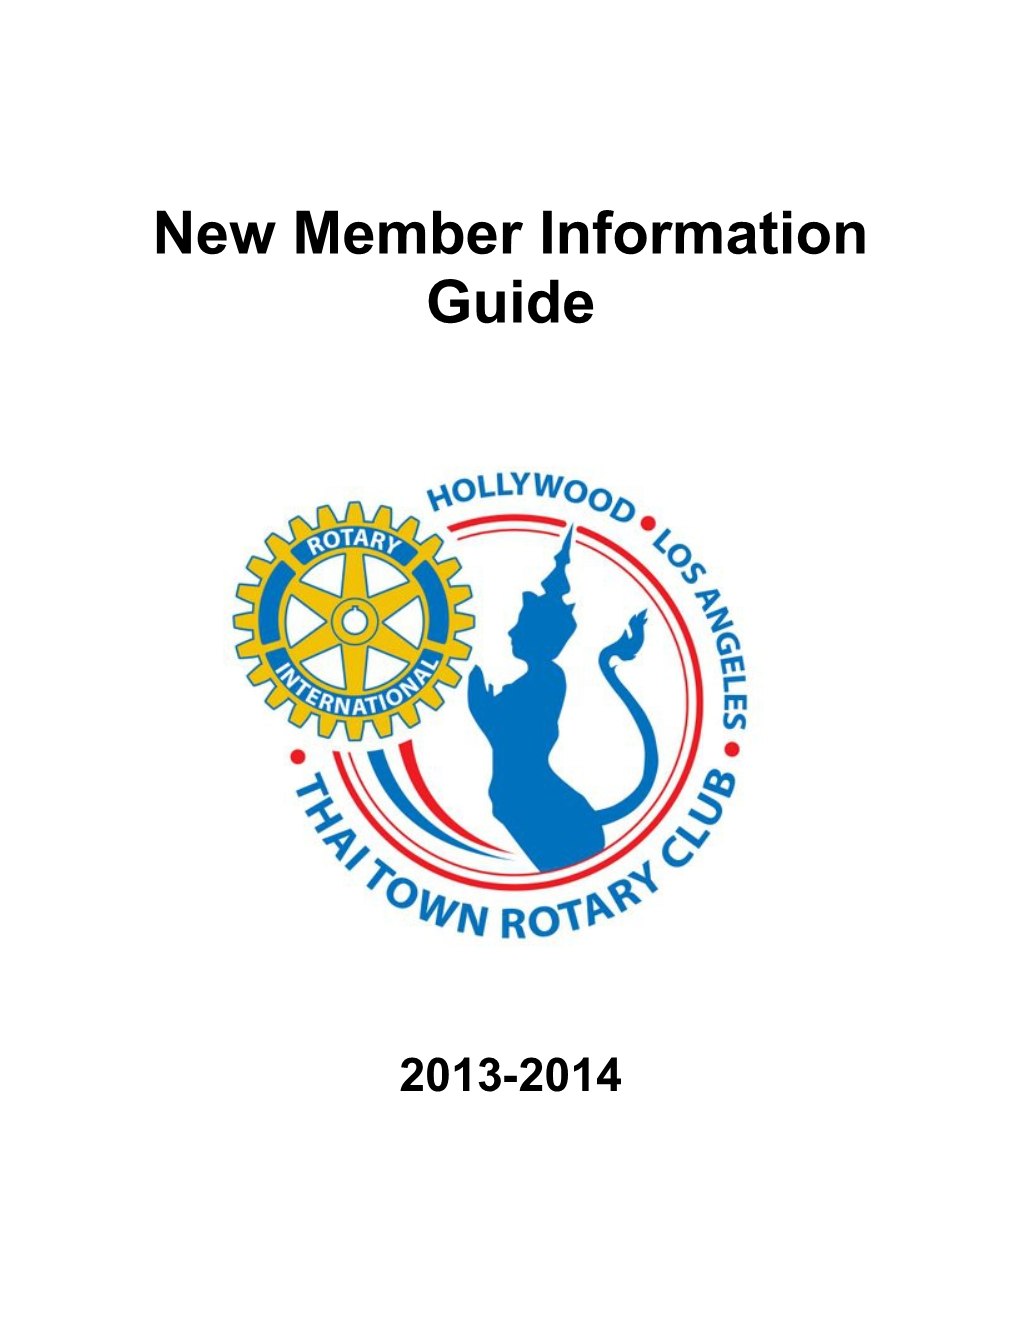 New Member Information Guide